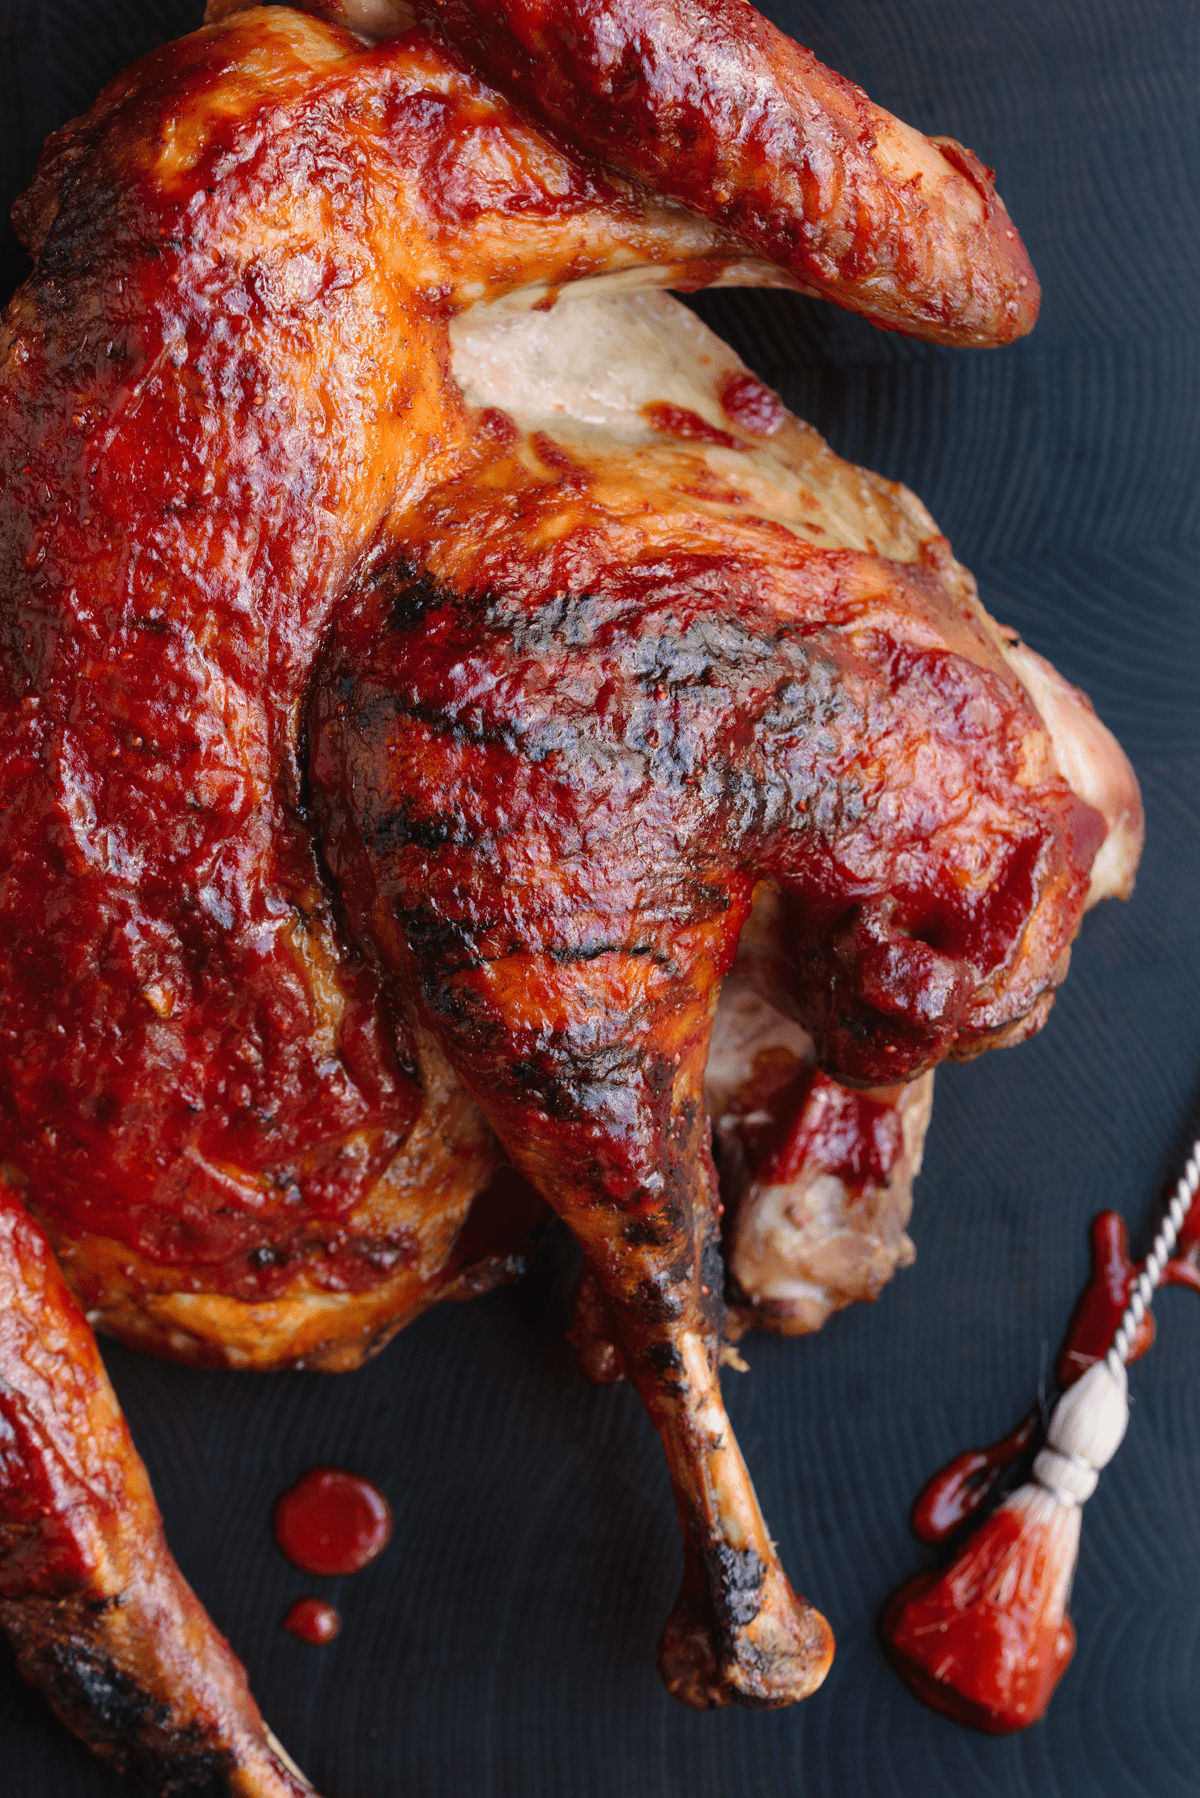 Grilled Turkey Recipe by Tiffani Thiessen